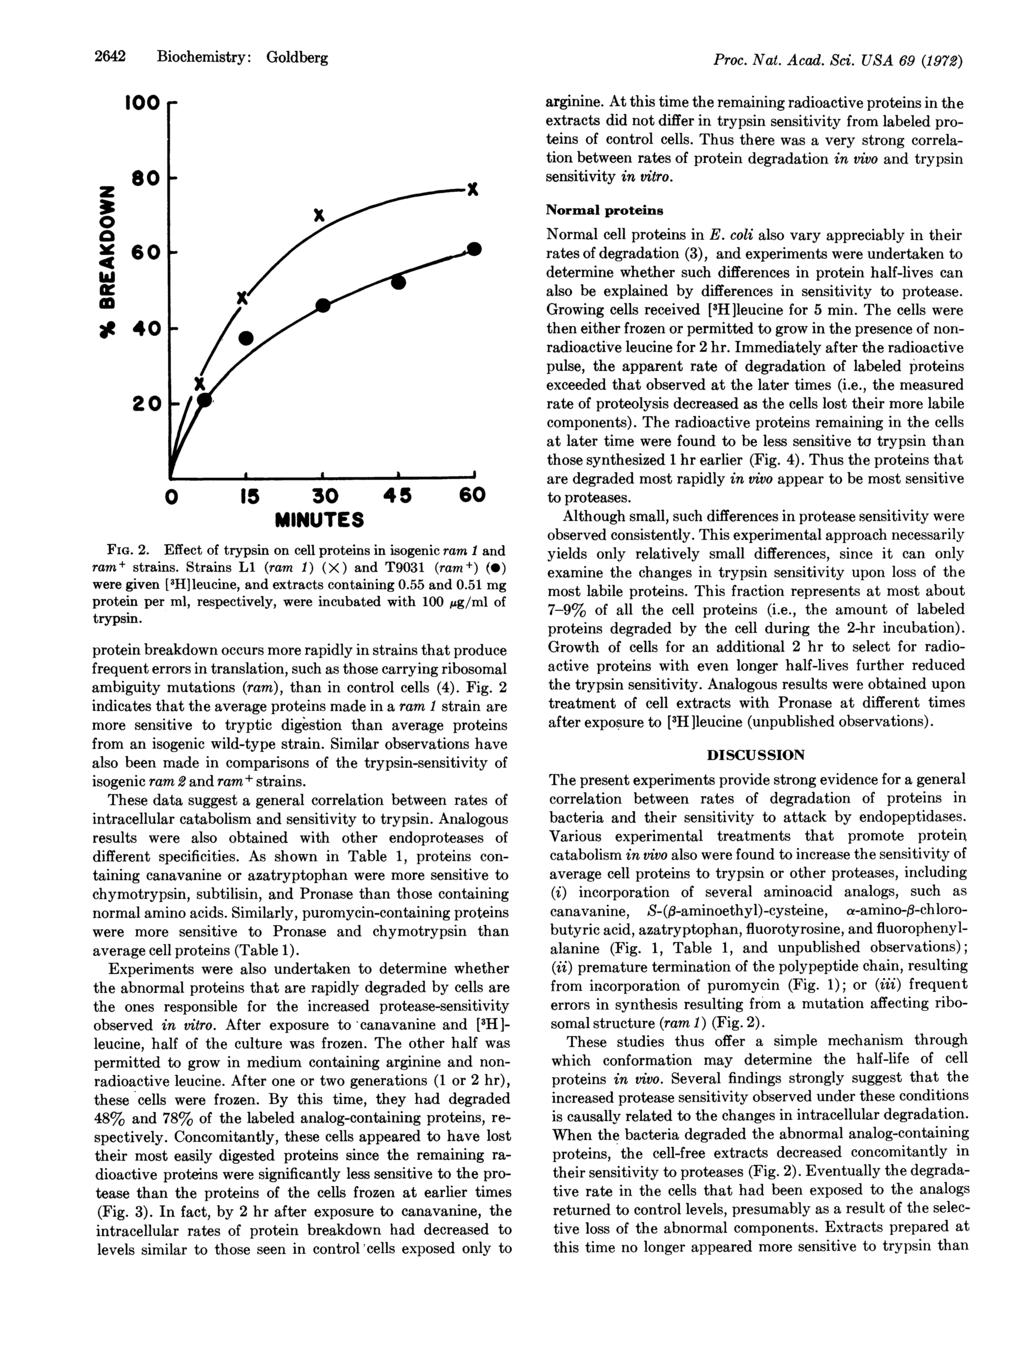 2642 Biochemistry: Goldberg 100 Z80_X 0 a < 60 - IR 40 ~/ X ~ ~~~~~~~~~~~~ X 20 1 * 0 15 30 45 60 FIG. 2. Effect of trypsin on cell proteins in isogenic ram 1 and ram+ strains.